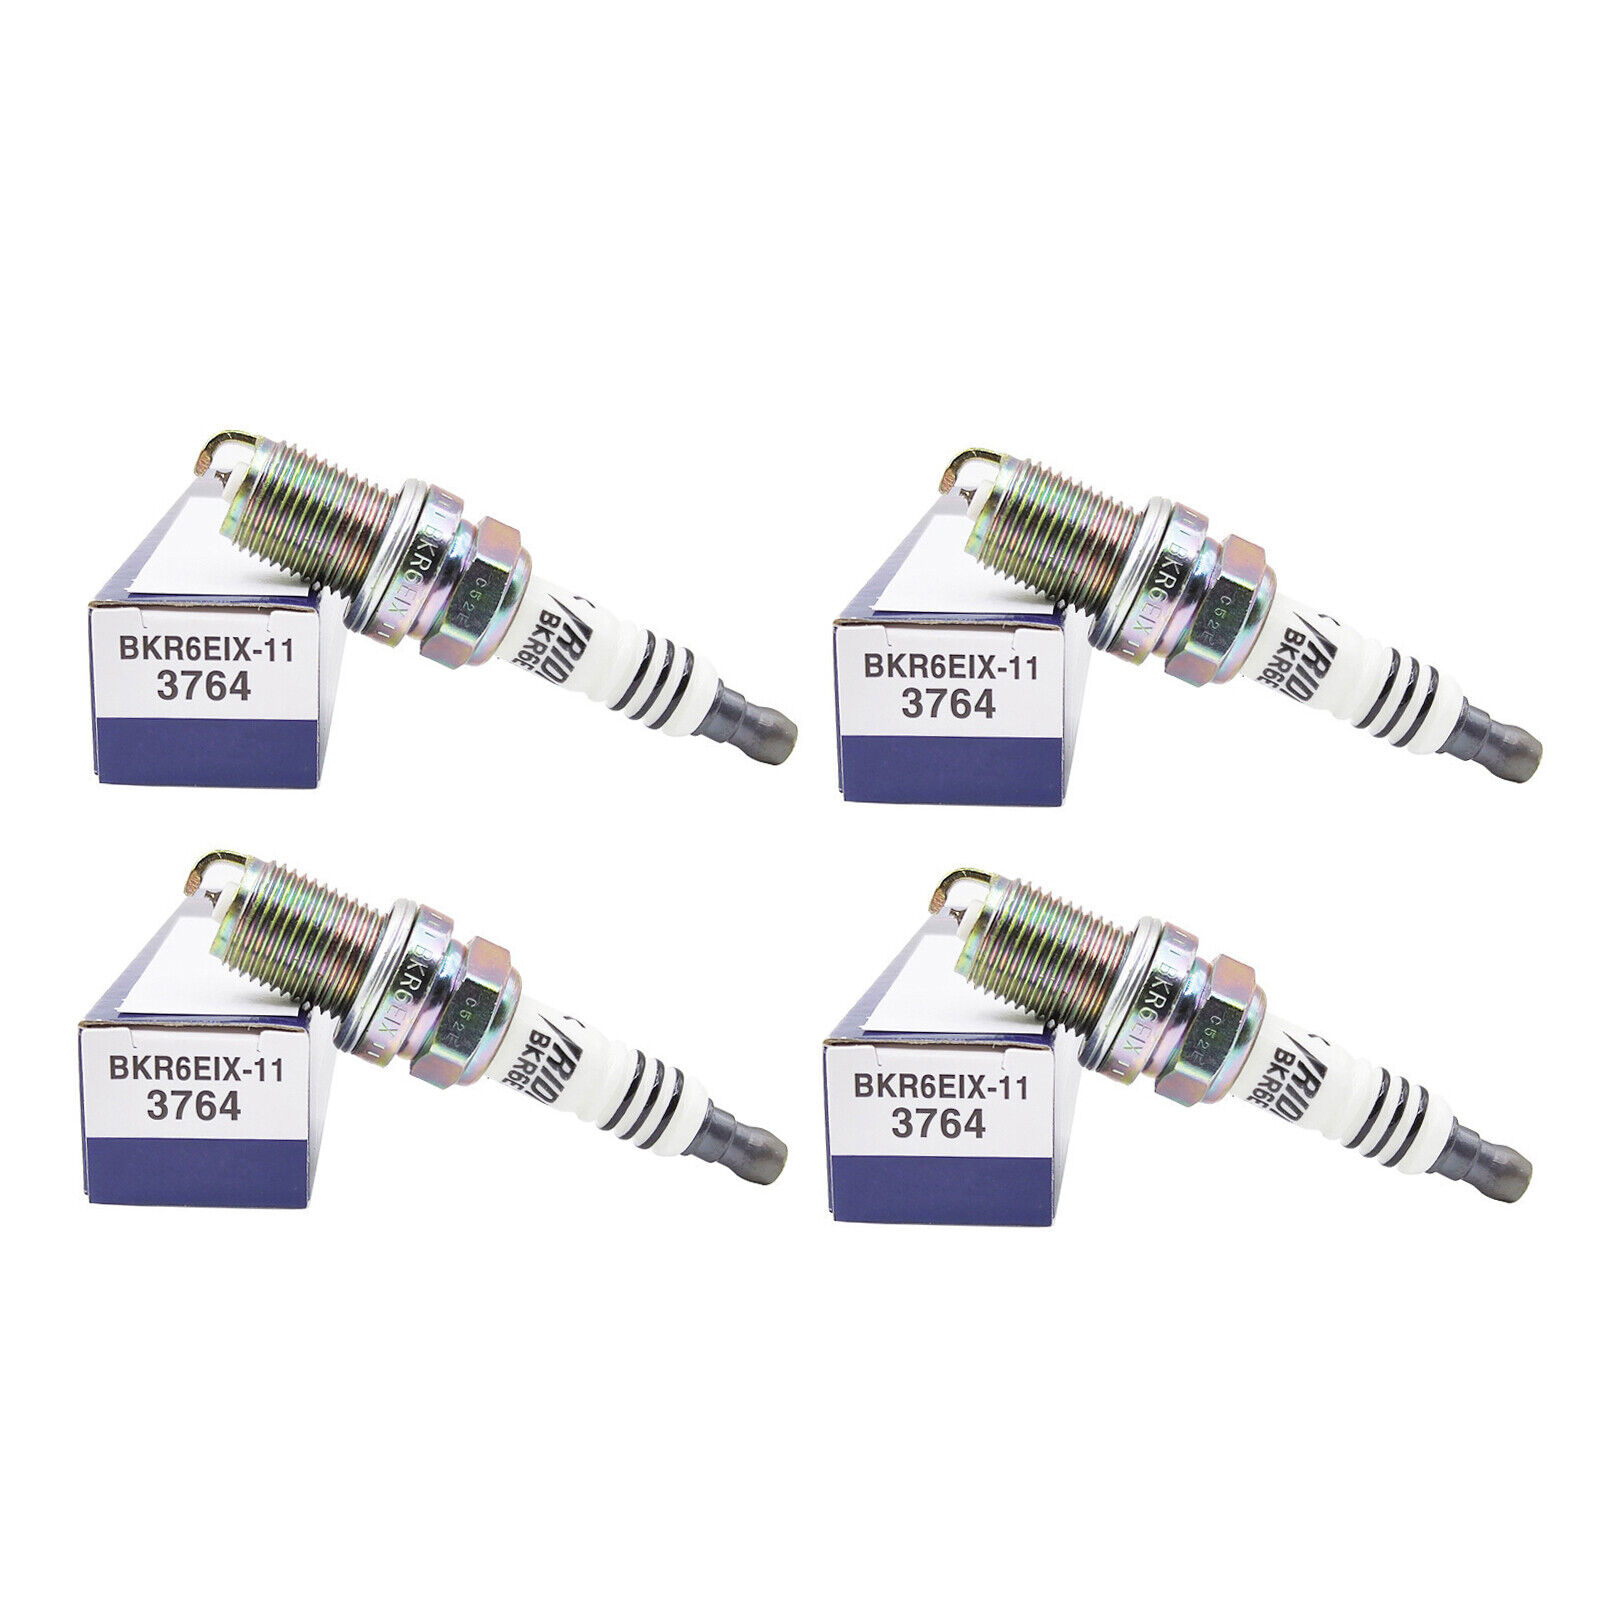 4 plugs New BKR6EIX-11 3764 4272 Iridium lX Spark Plugs For Honda Mazda